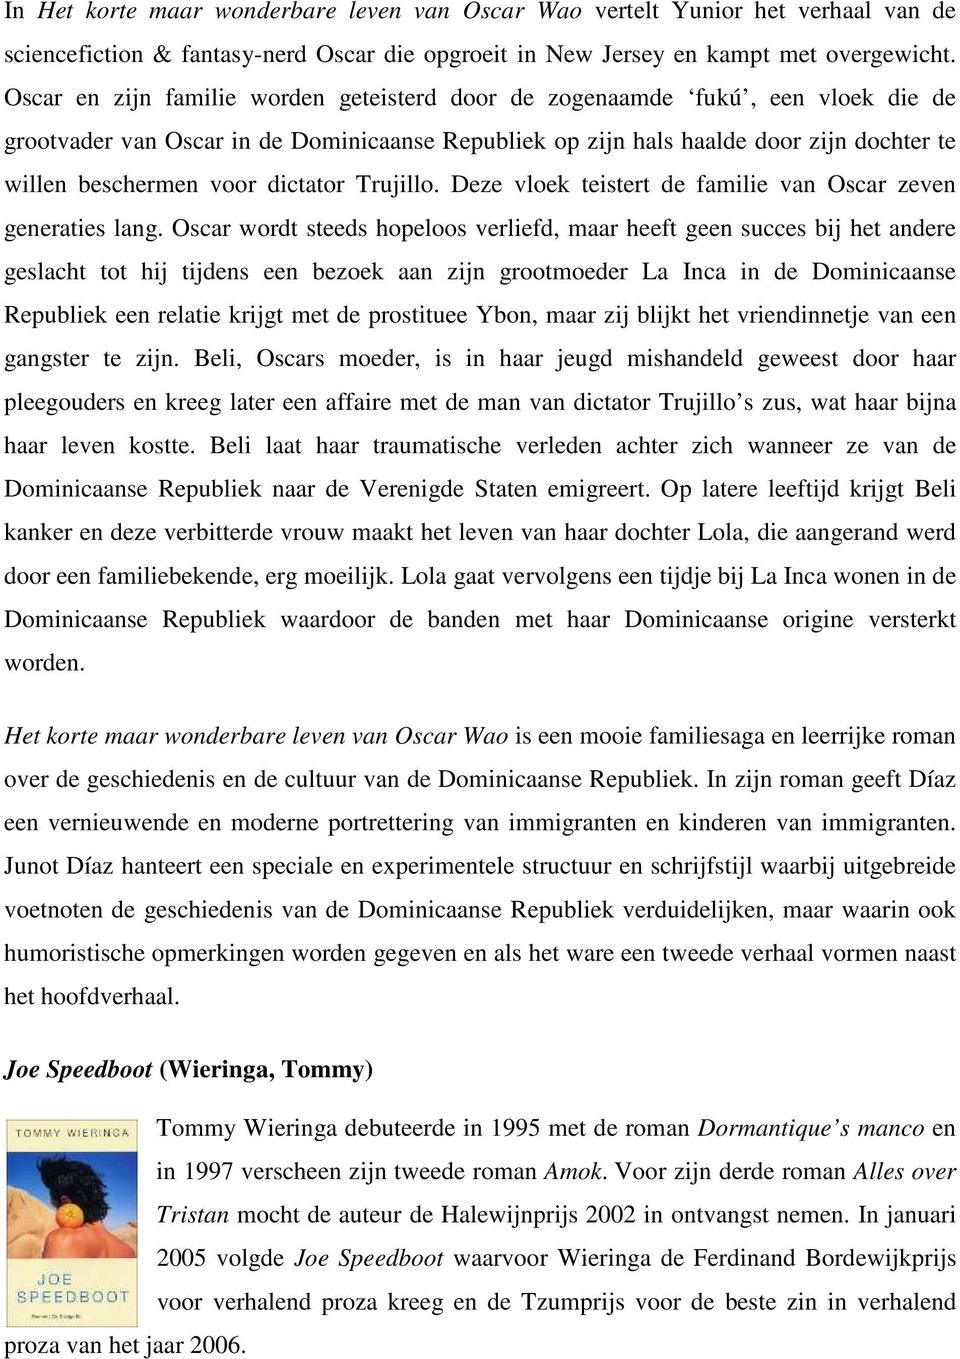 Tommy Wieringa - Joe Speedboot, NL Ebook(ePub).DMT